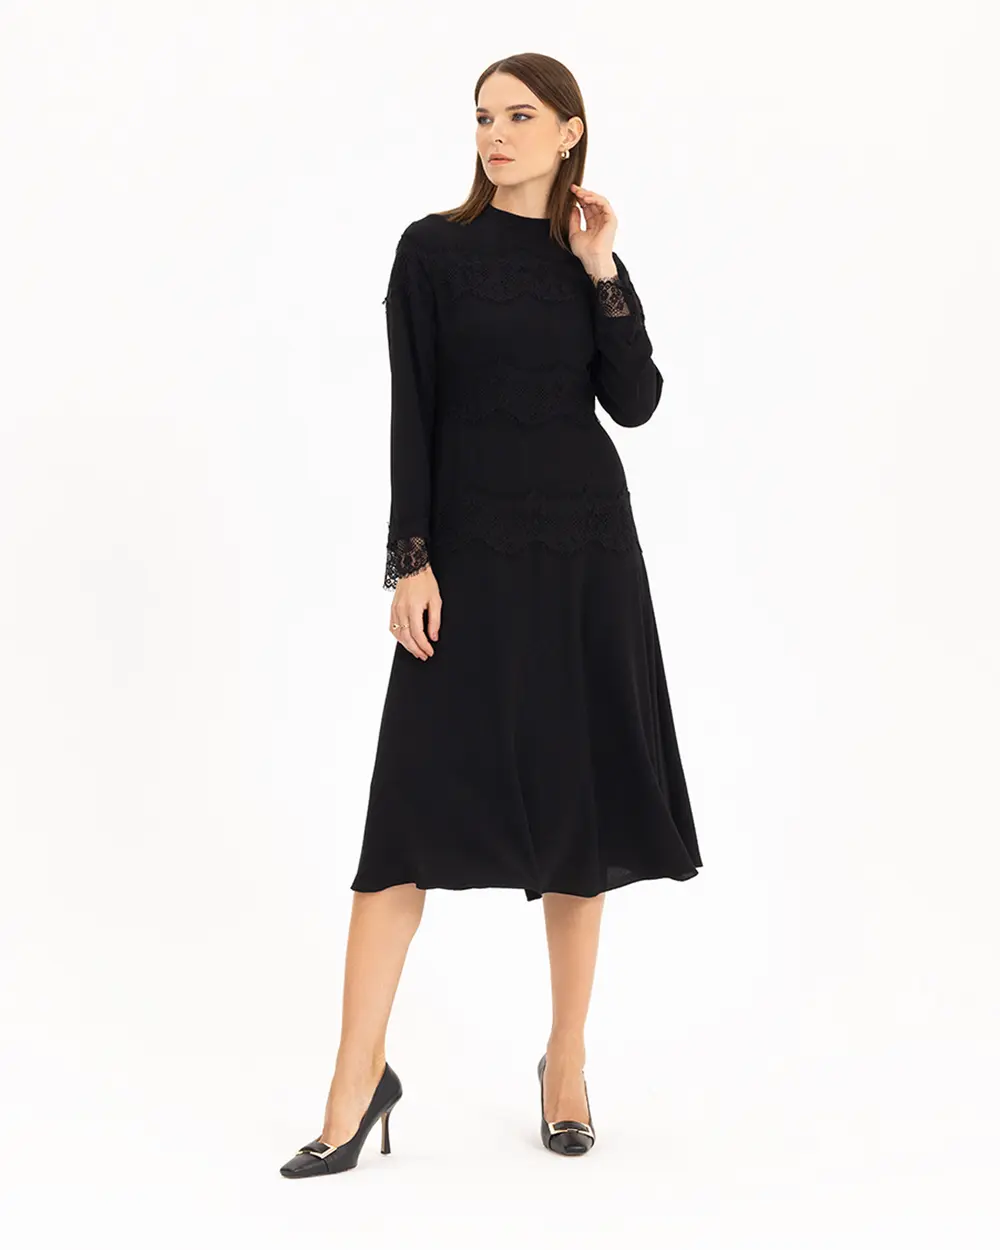 Lace Detailed Midi Length Dress